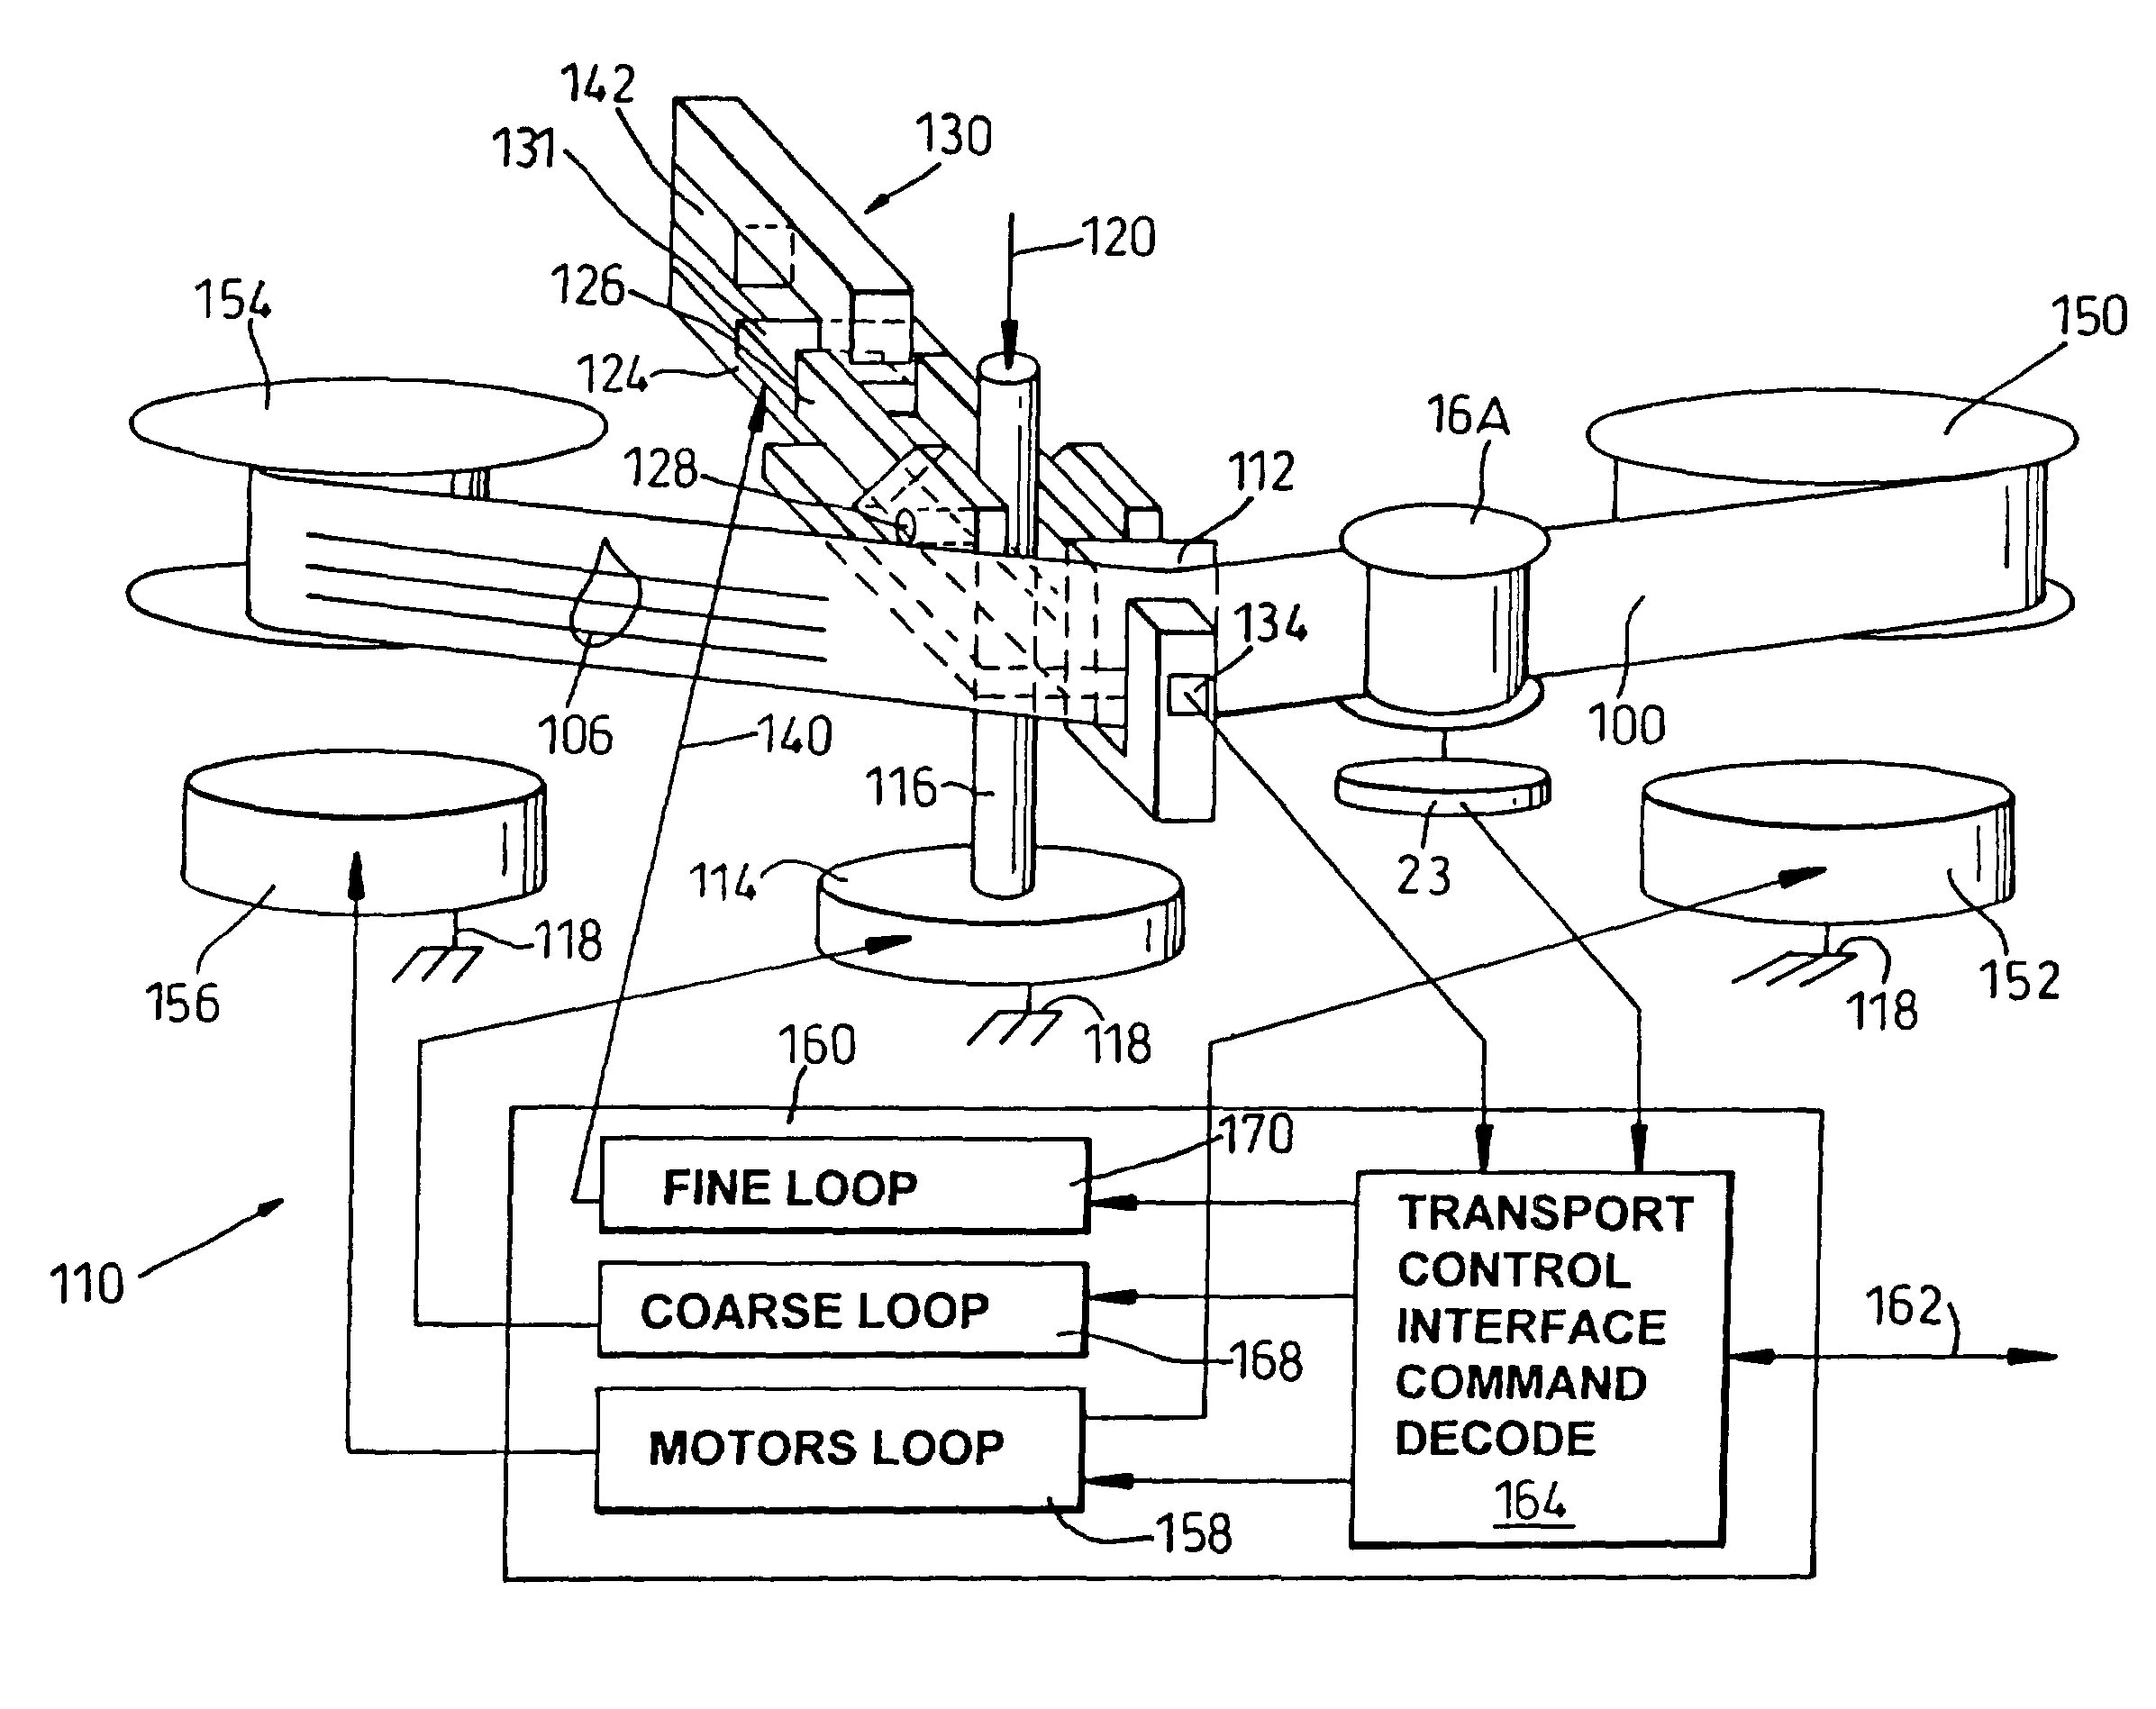 Multi-channel magnetic tape system having optical tracking servo